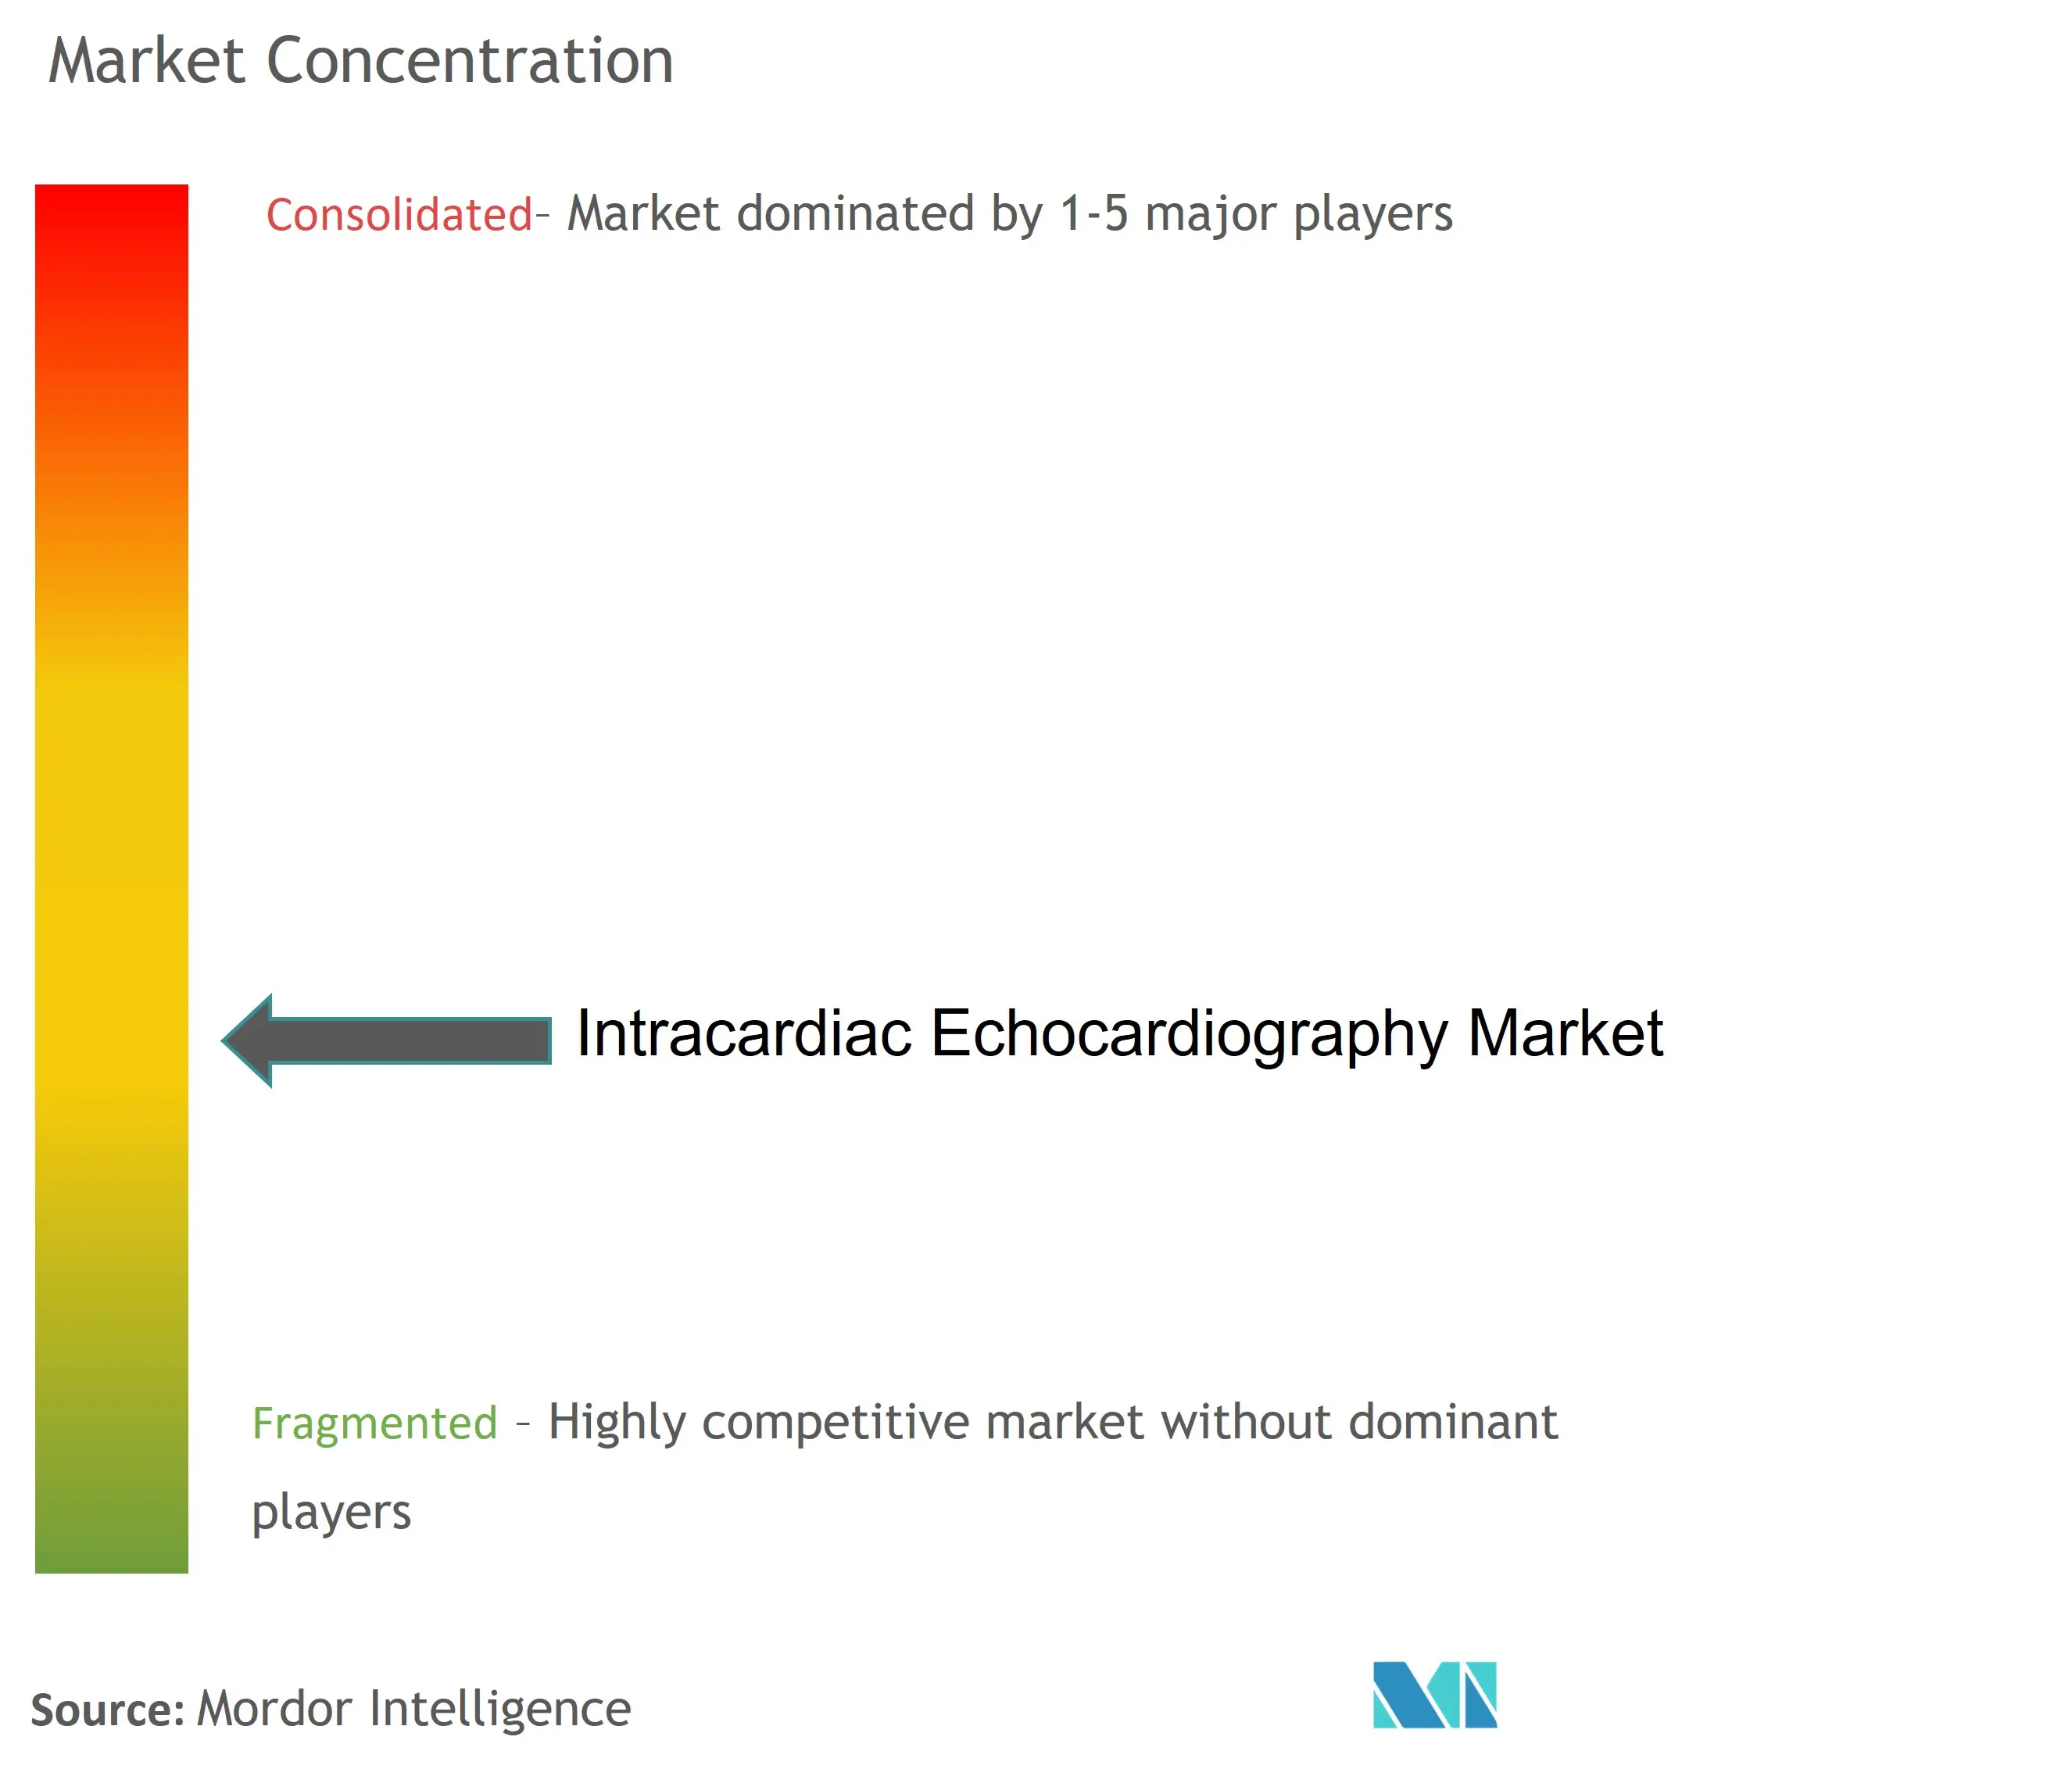 Intracardiac Echocardiography Market Concentration